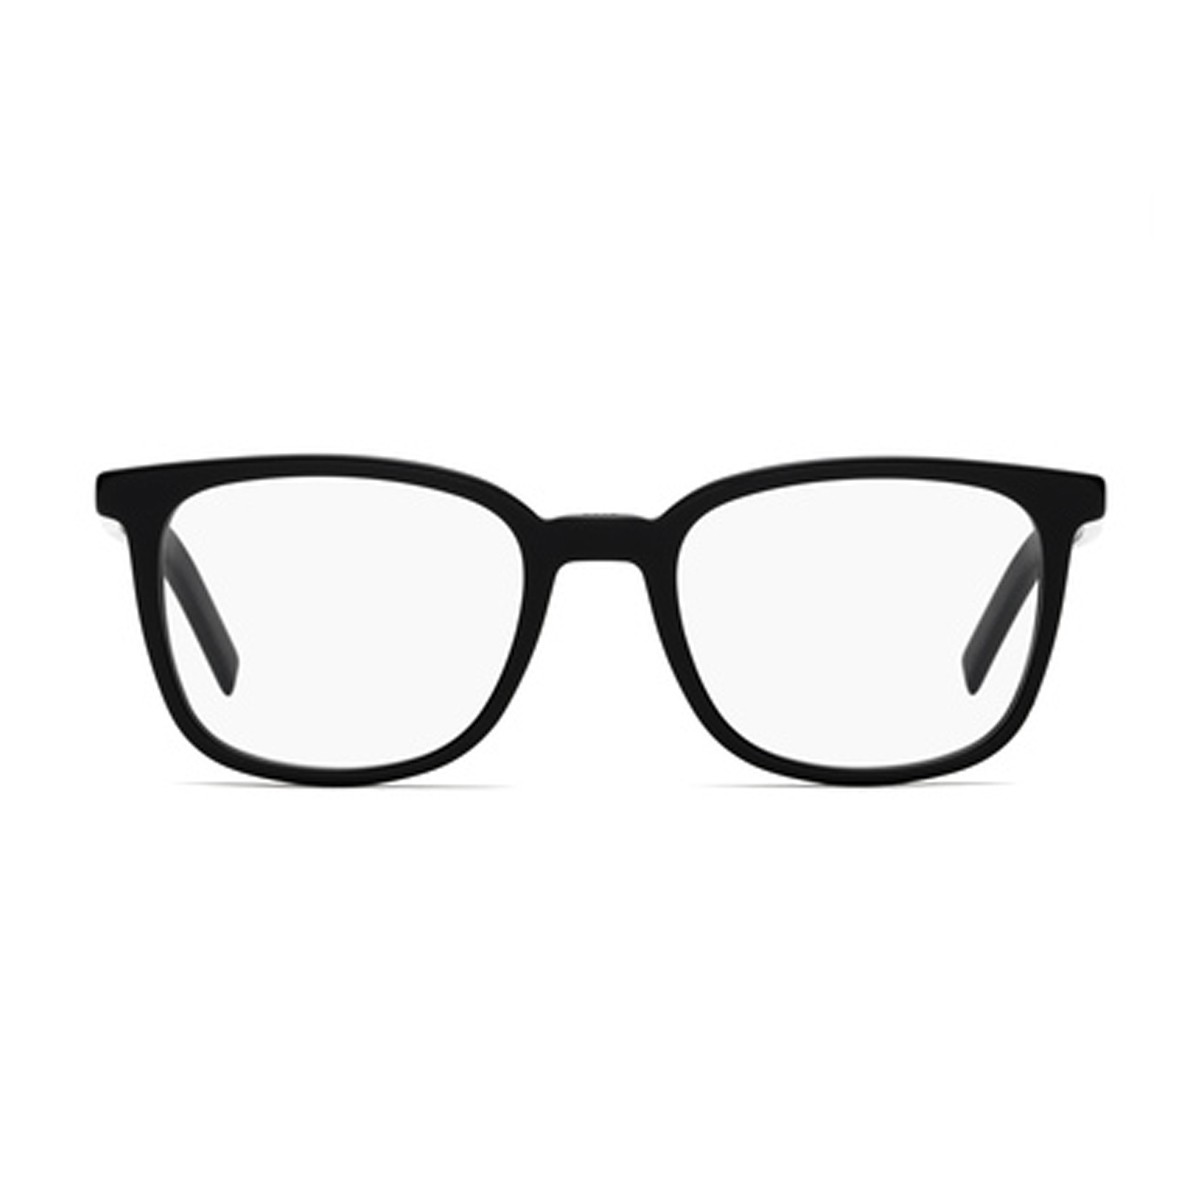 DIOR BLACK TIE 267  Dior  Aviator Eyeglasses  Eye Hub Warehouse